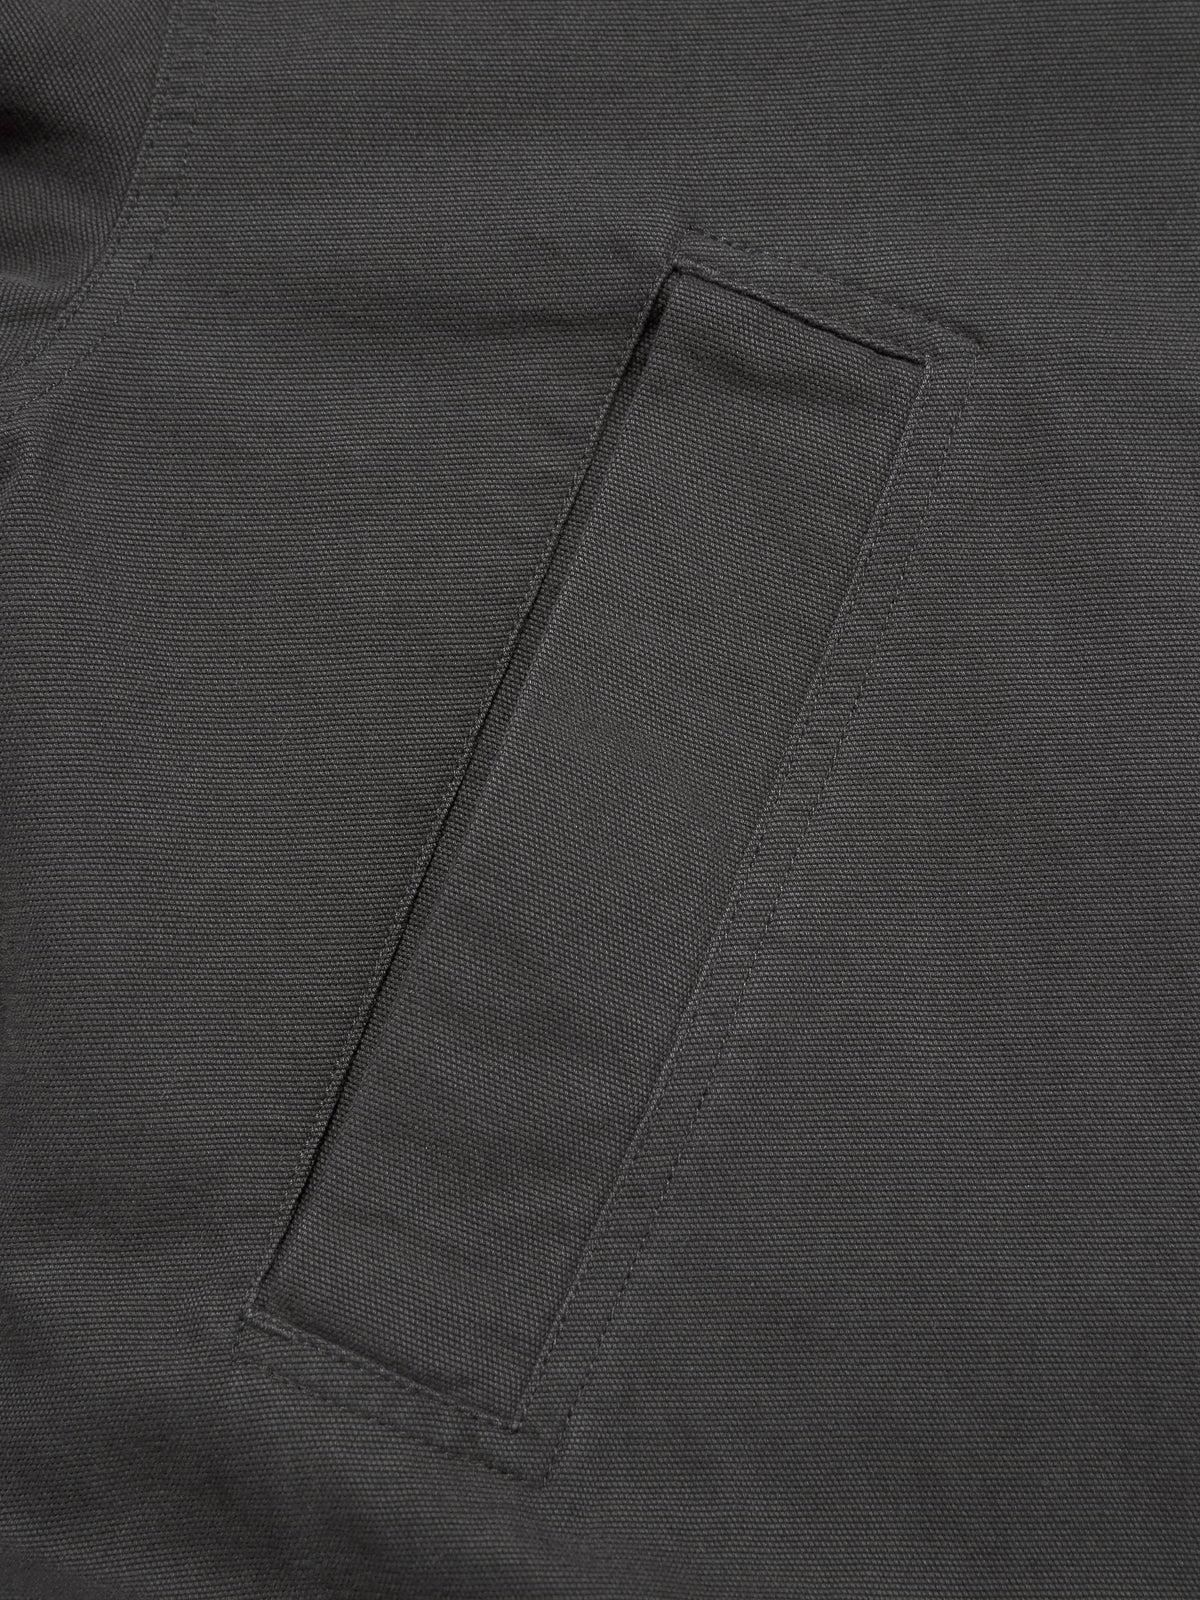 Chore Jacket Outerwear 